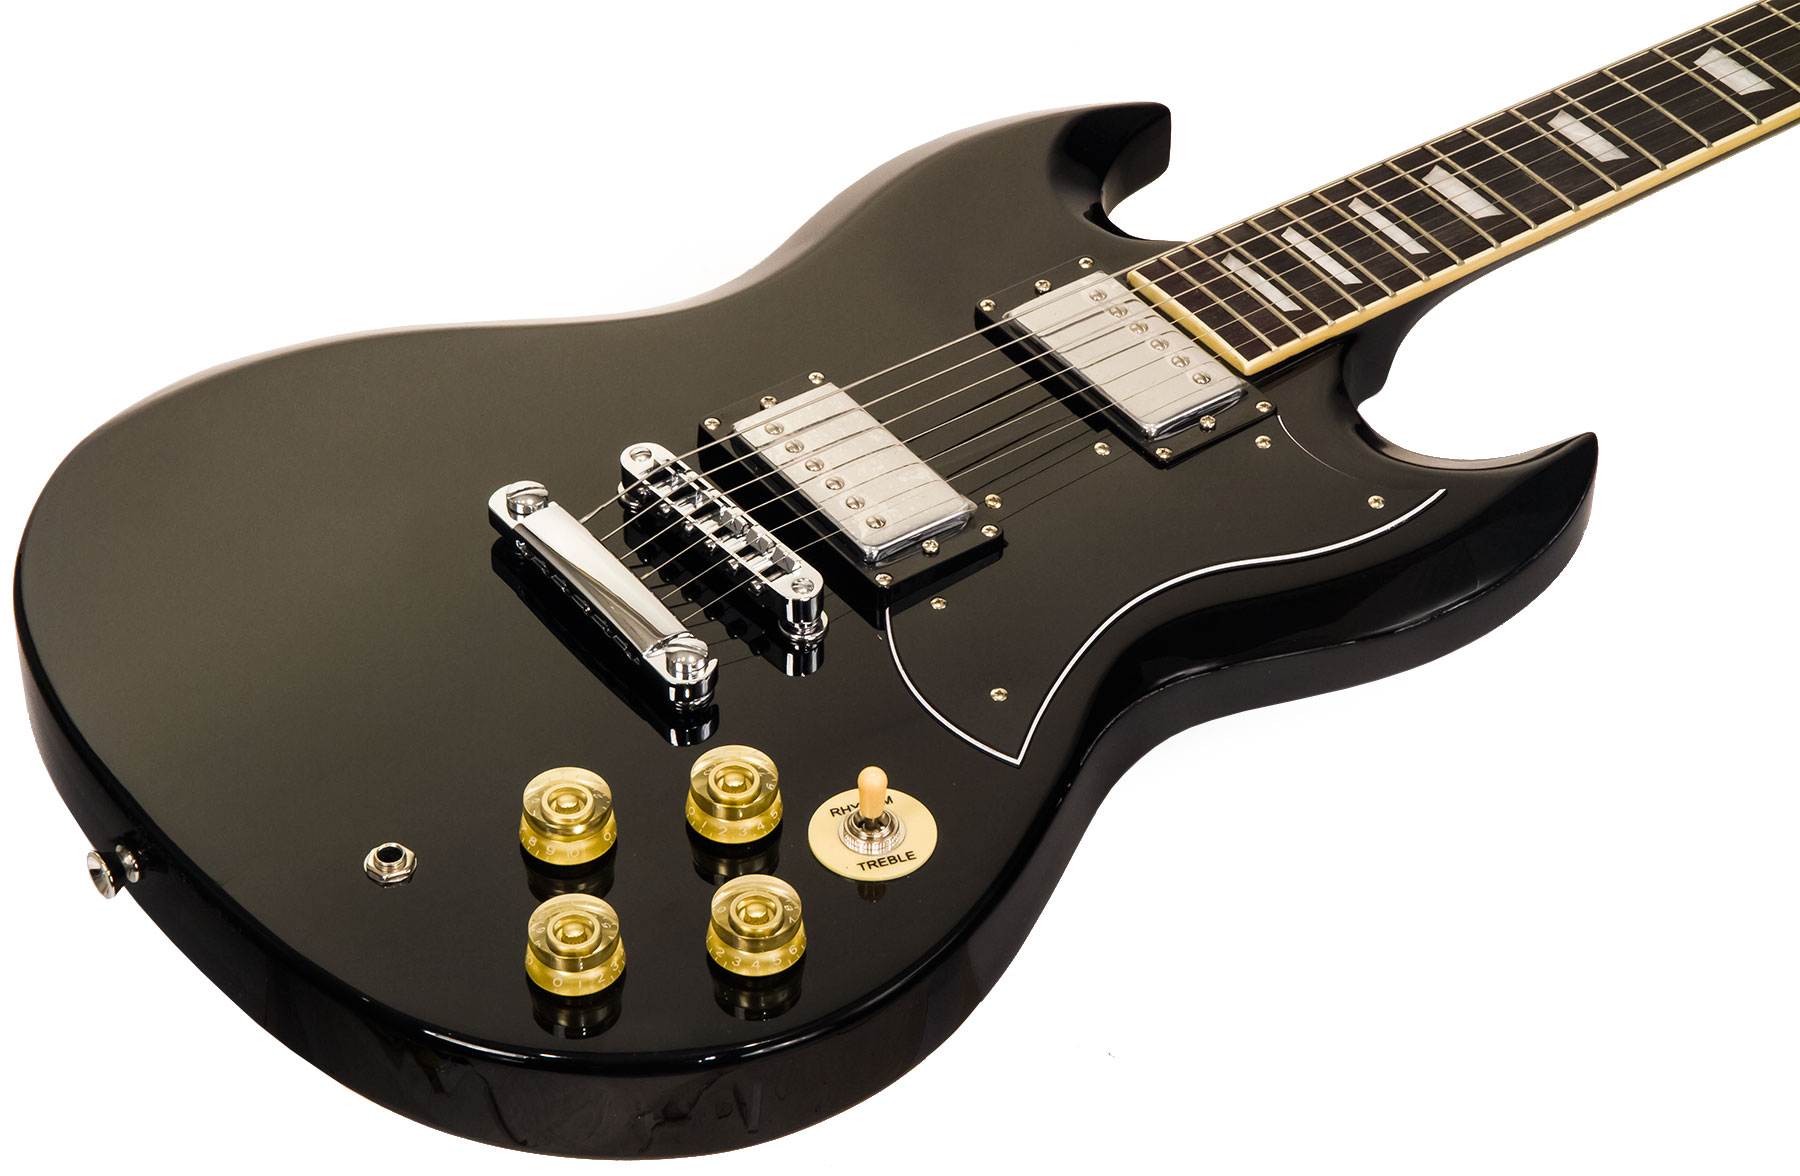 Eastone Sdc70 +marshall Mg10g Gold +cable +housse +courroie +mediators - Black - Elektrische gitaar set - Variation 2